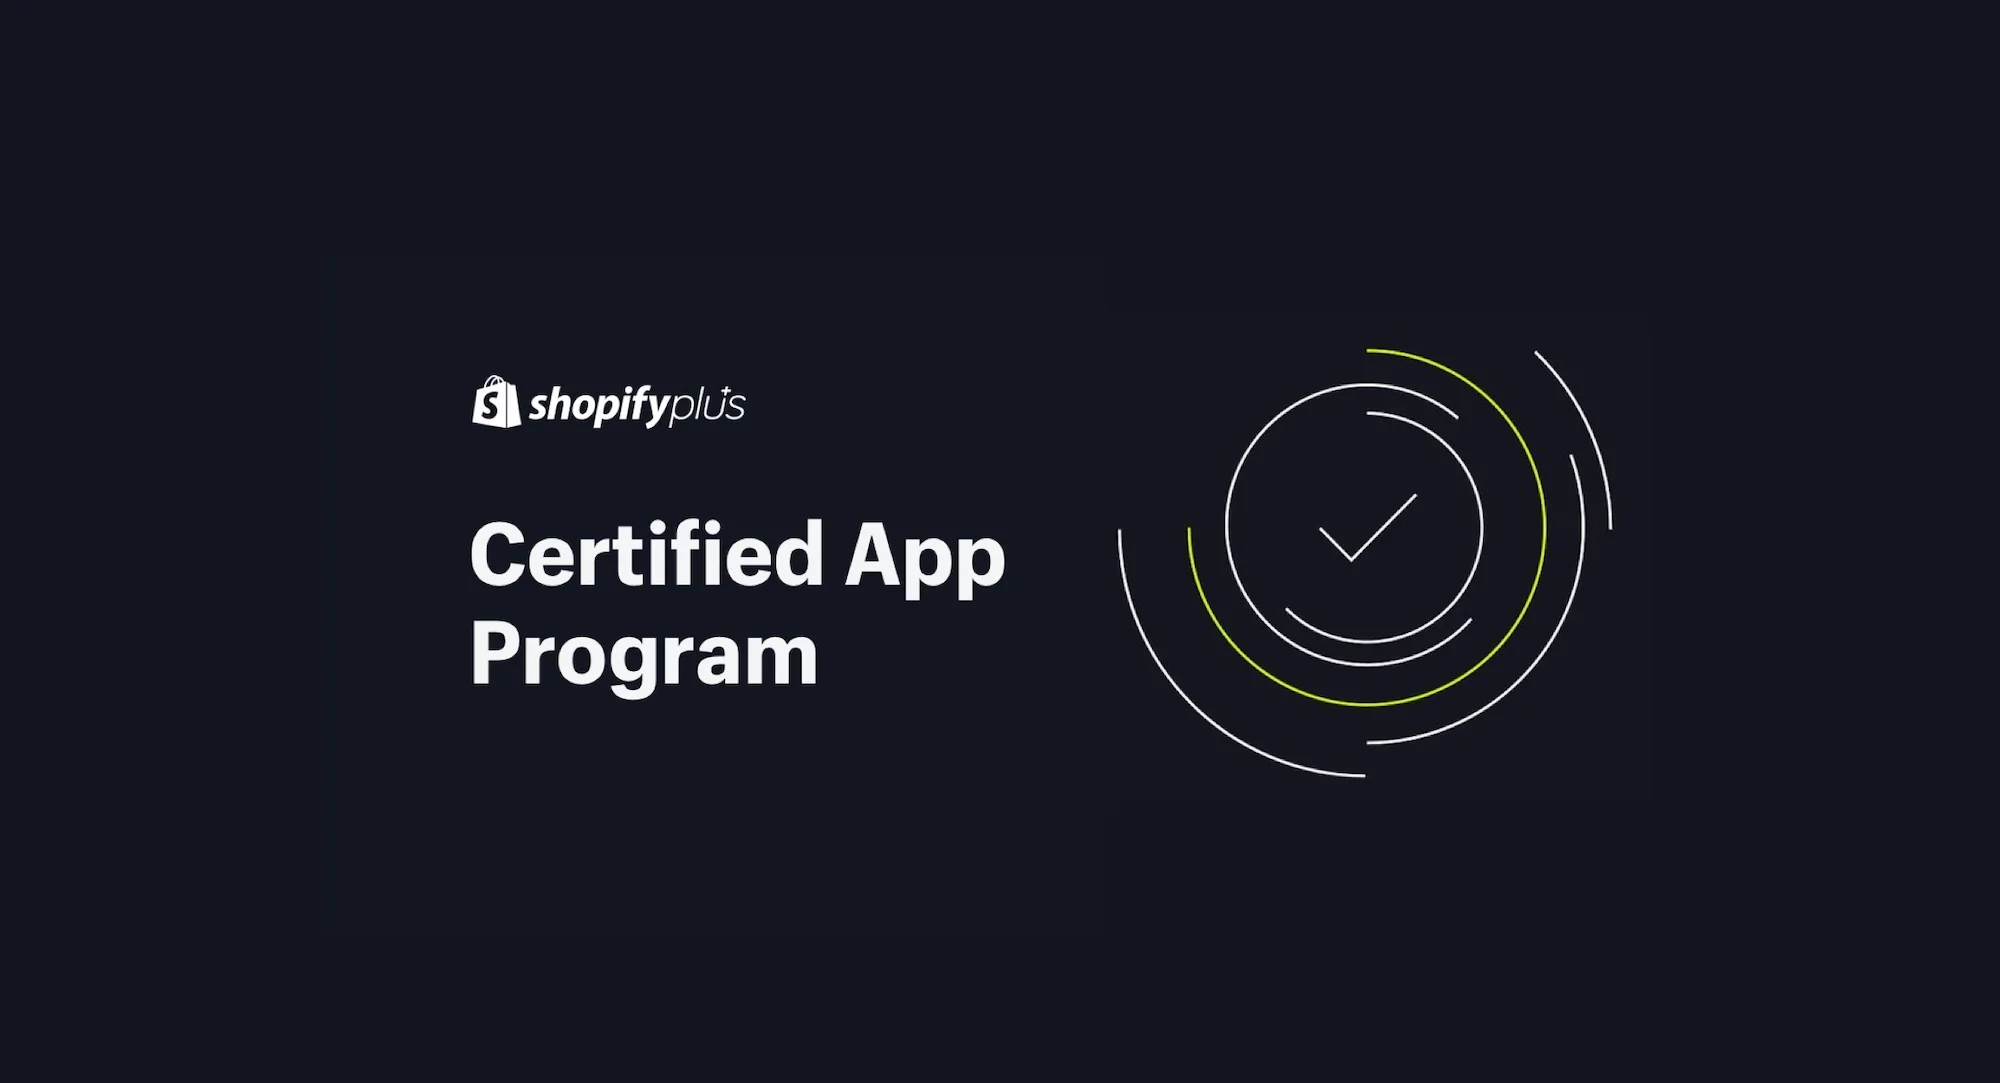 6. Shopify Plus offers more options of App Program.webp